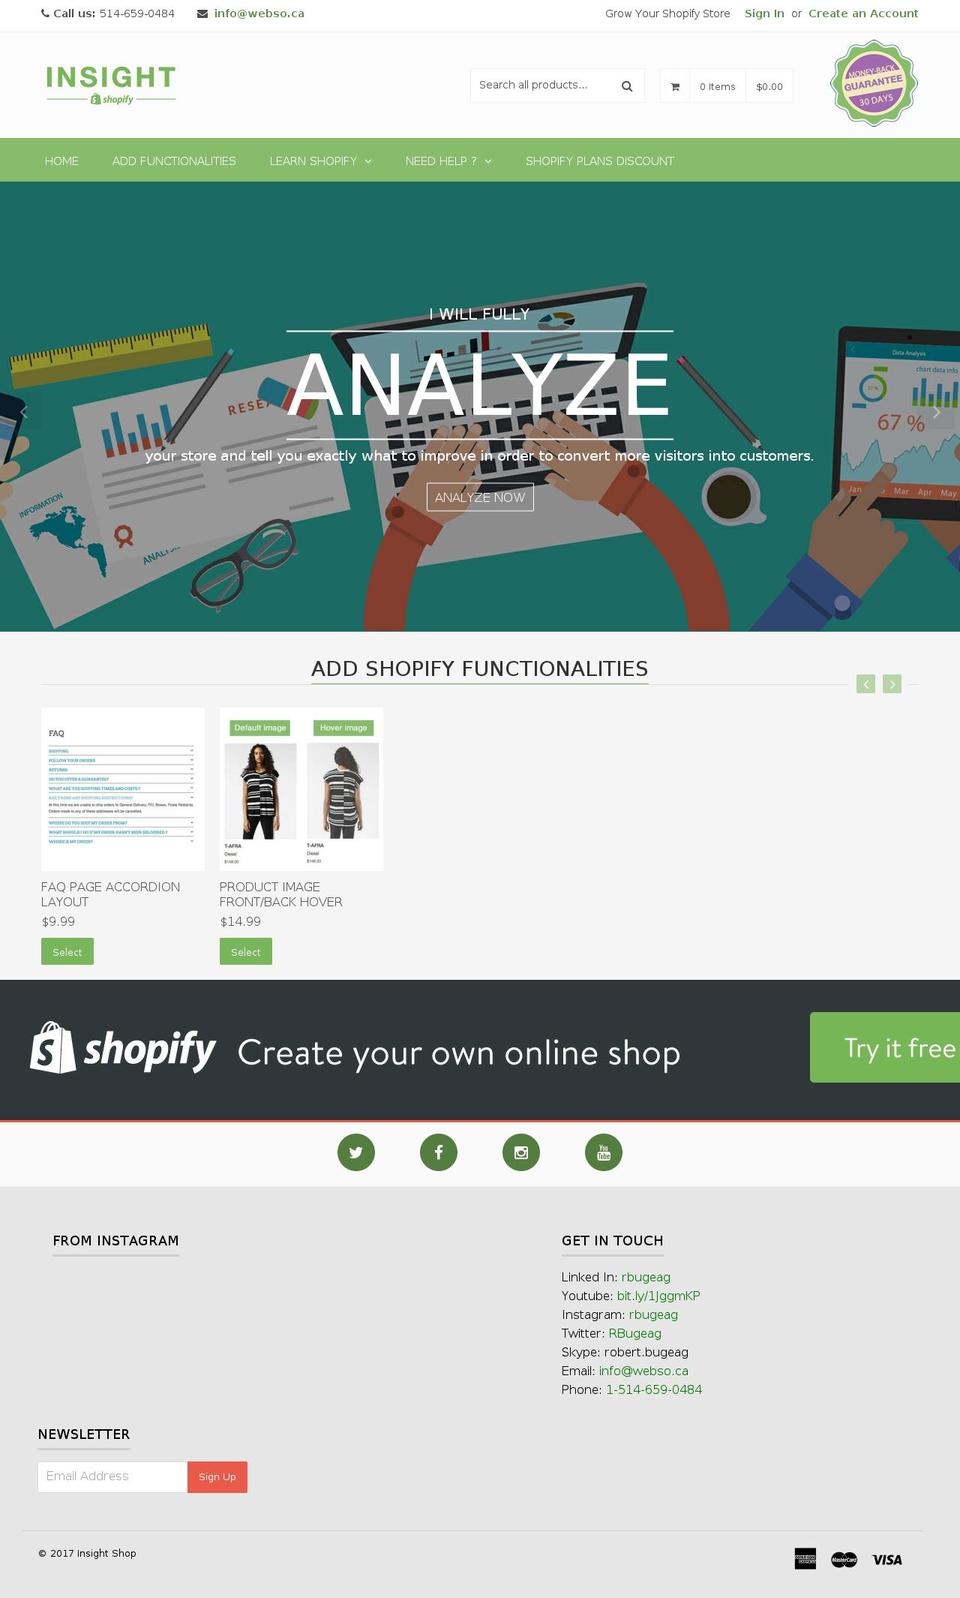 insightshop.co shopify website screenshot